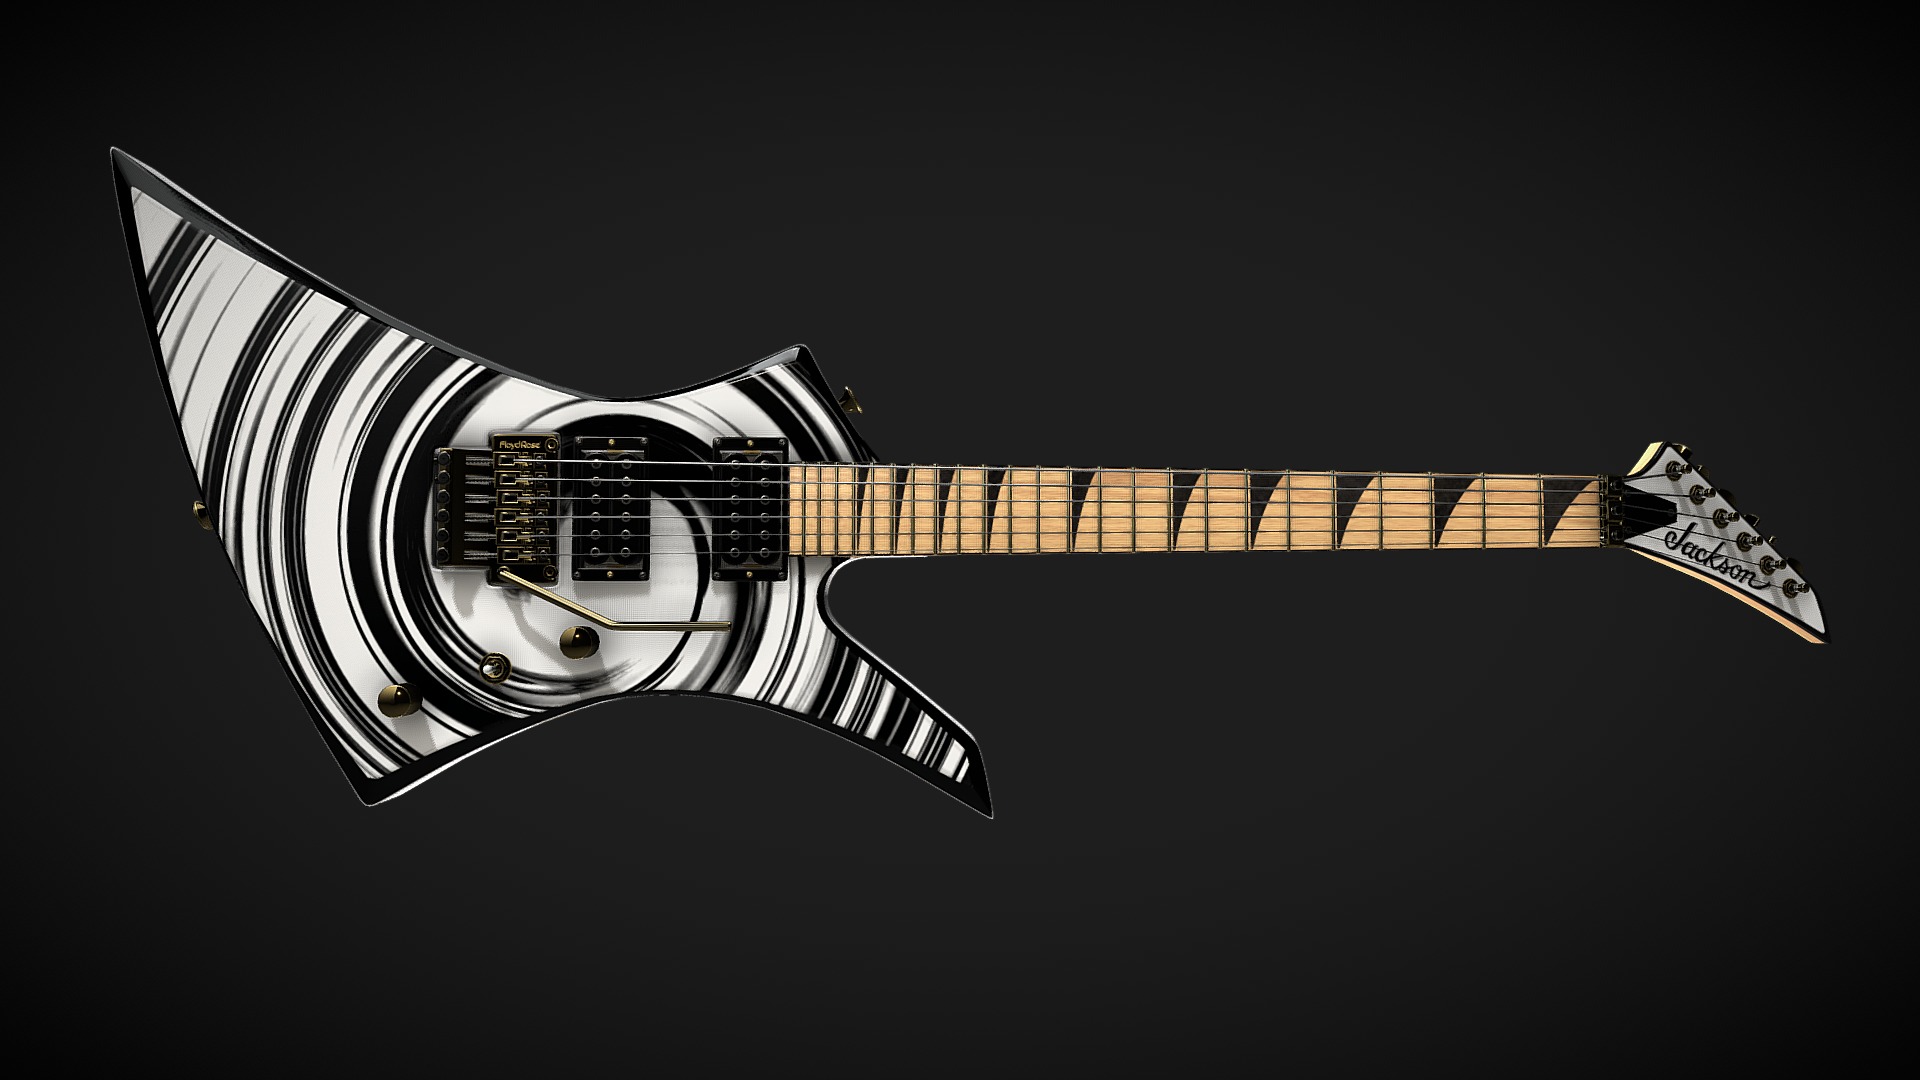 3D model Electric guitar Jackson Kelly skin3 - This is a 3D model of the Electric guitar Jackson Kelly skin3. The 3D model is about a black and white guitar.